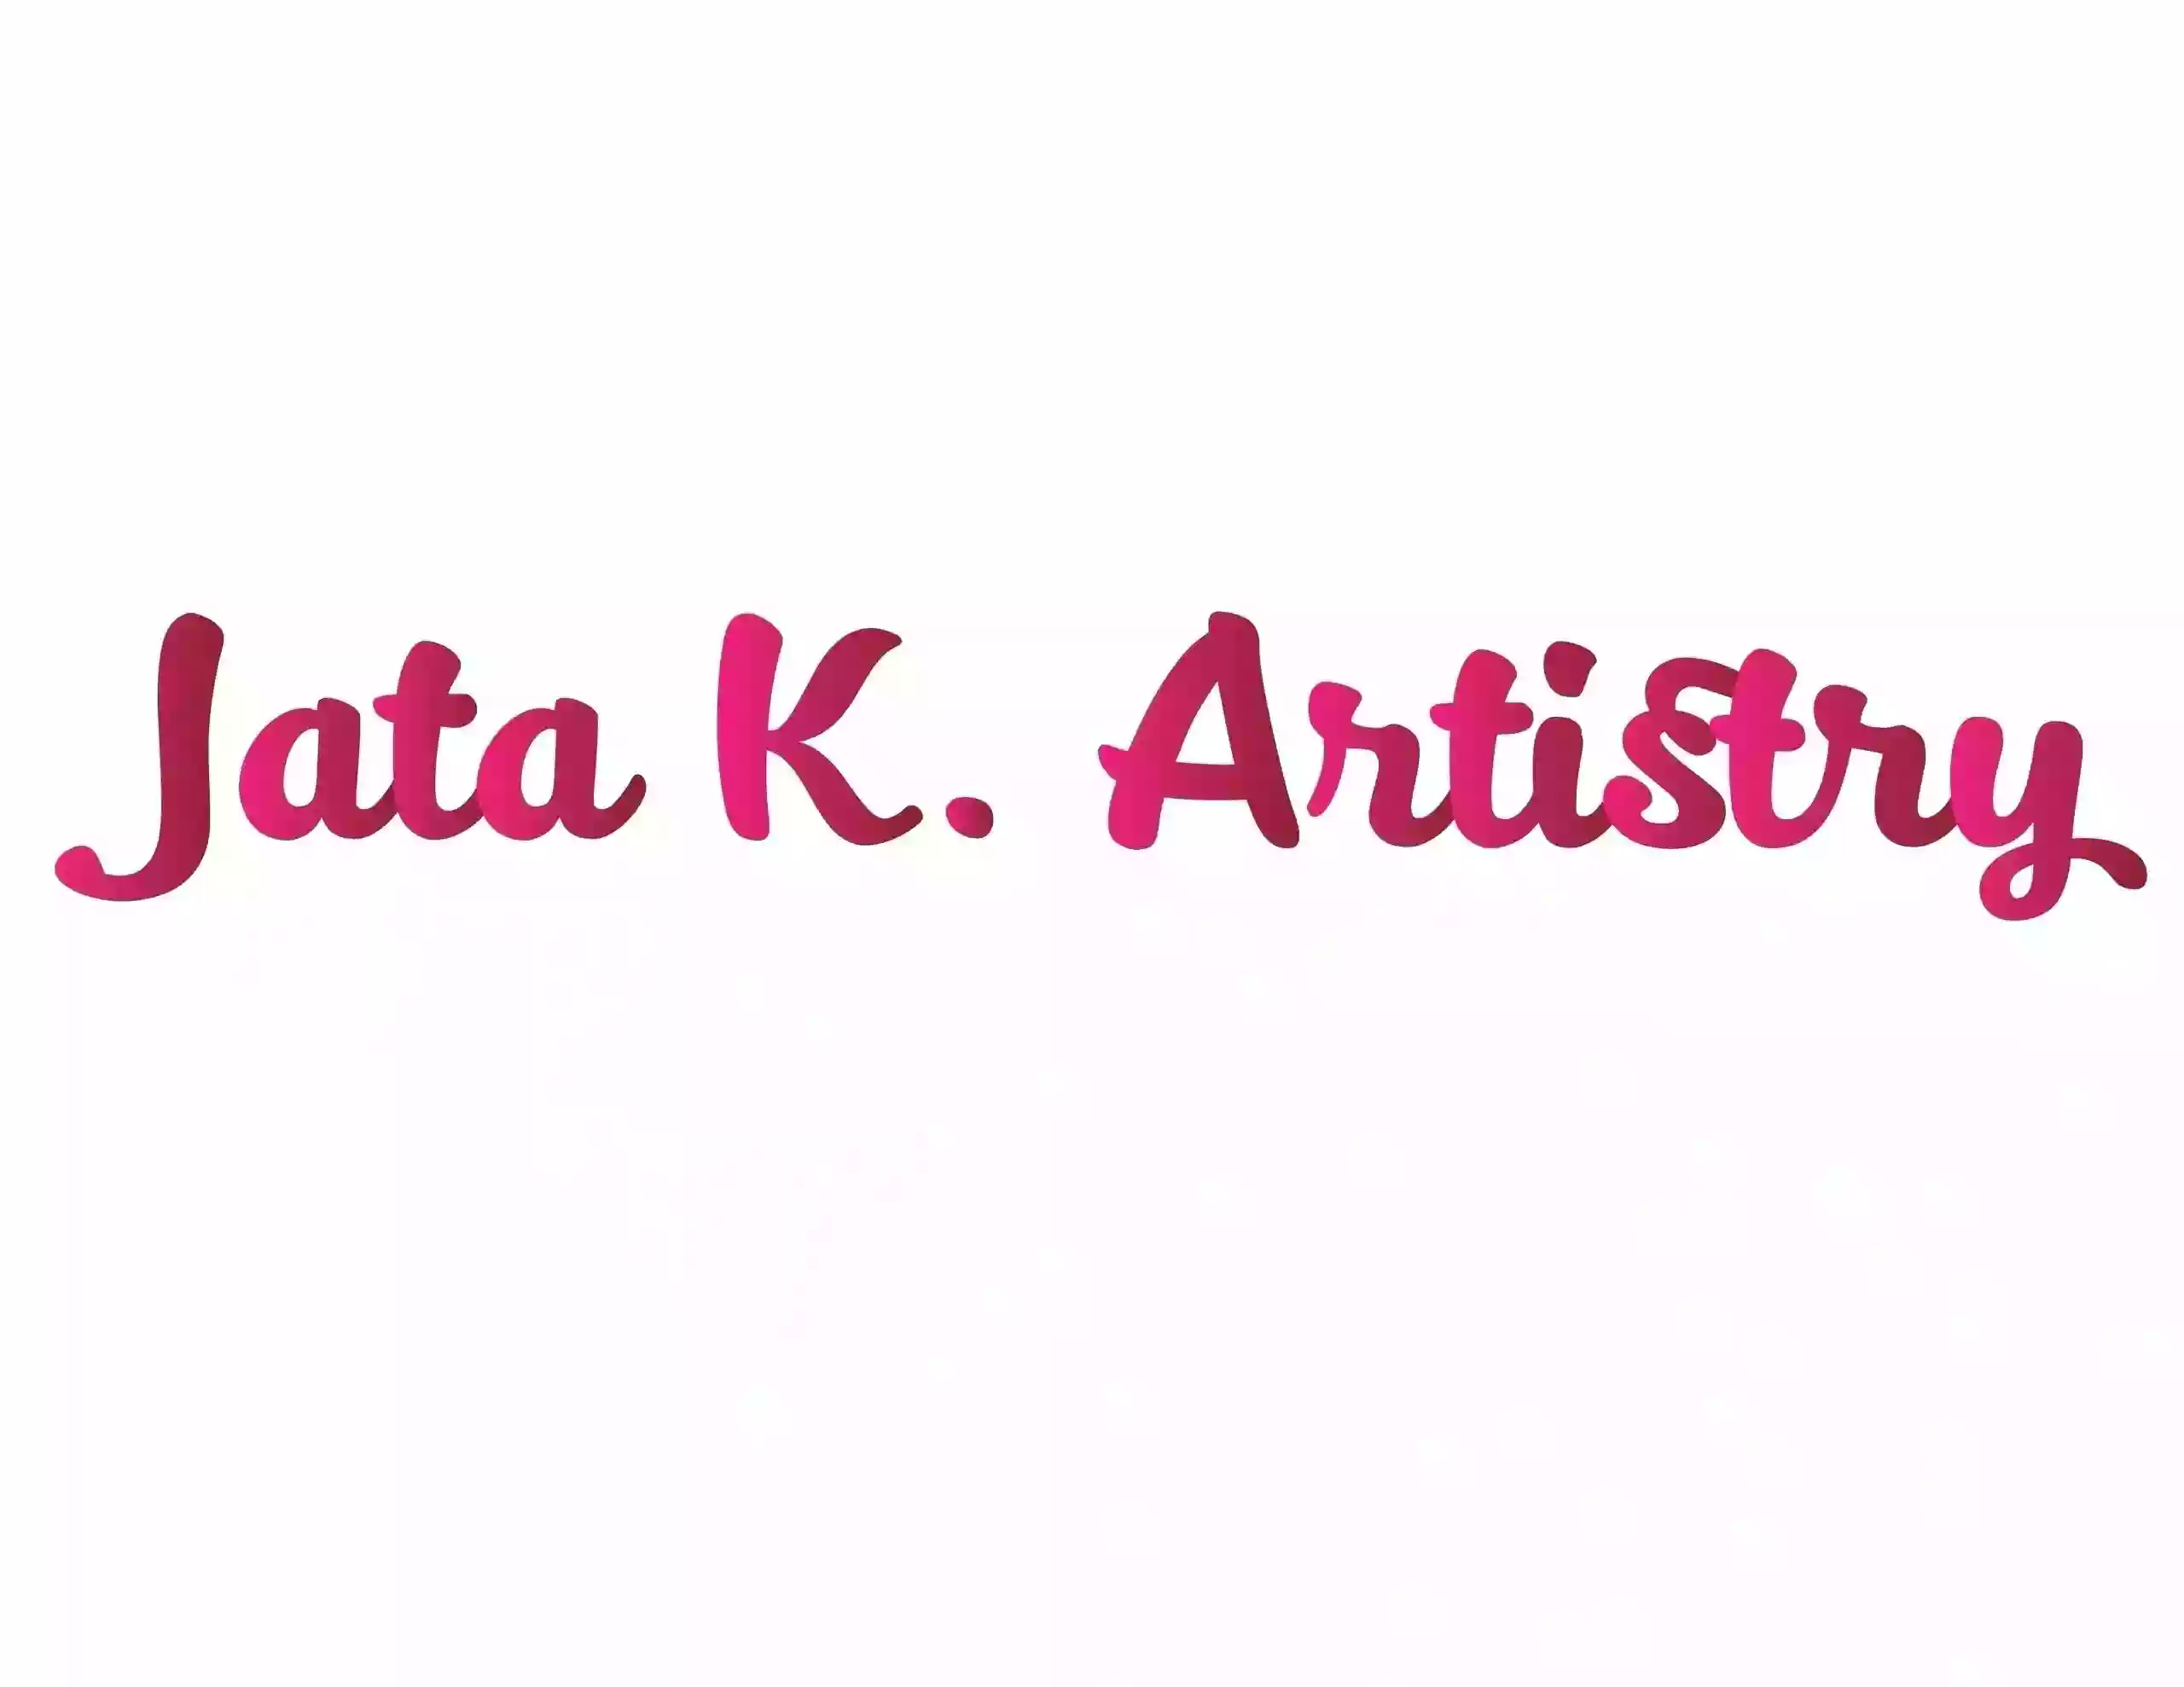 Jata K. Artistry Waxing & Beauty Suite